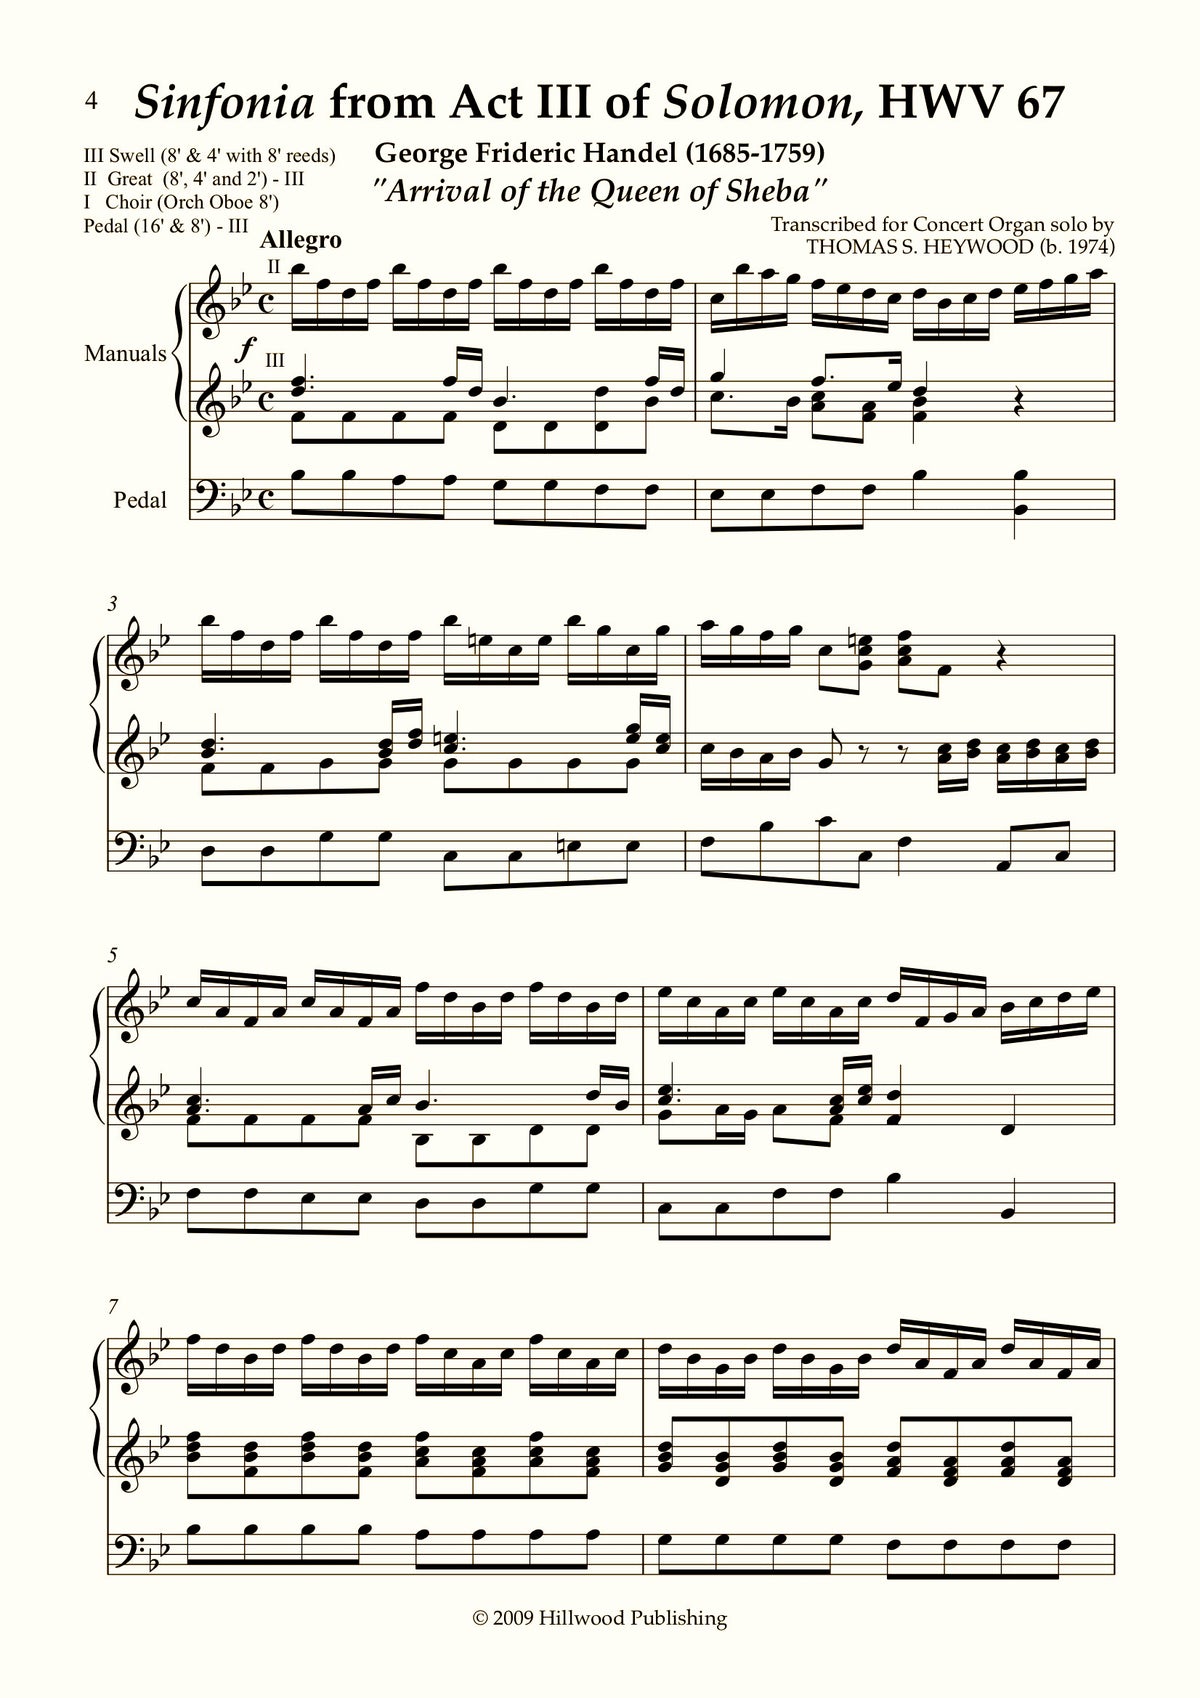 Handel/Heywood - Arrival of the Queen of Sheba from Solomon, HWV 67 (Score) - Concert Organ International